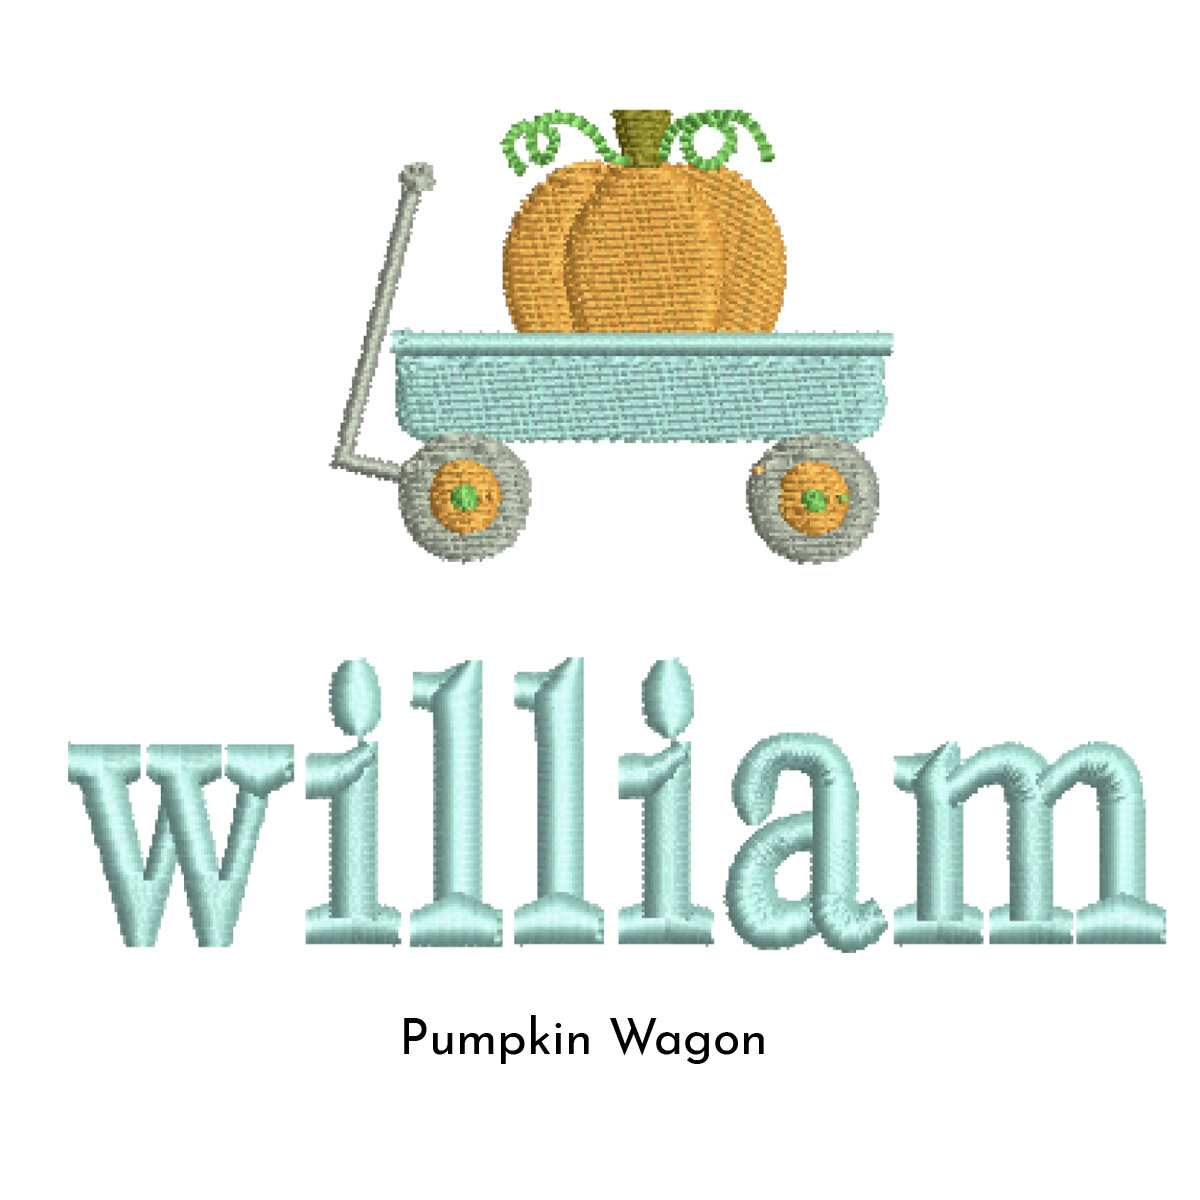 wagon pumpkin with name (pes) Printout.jpg